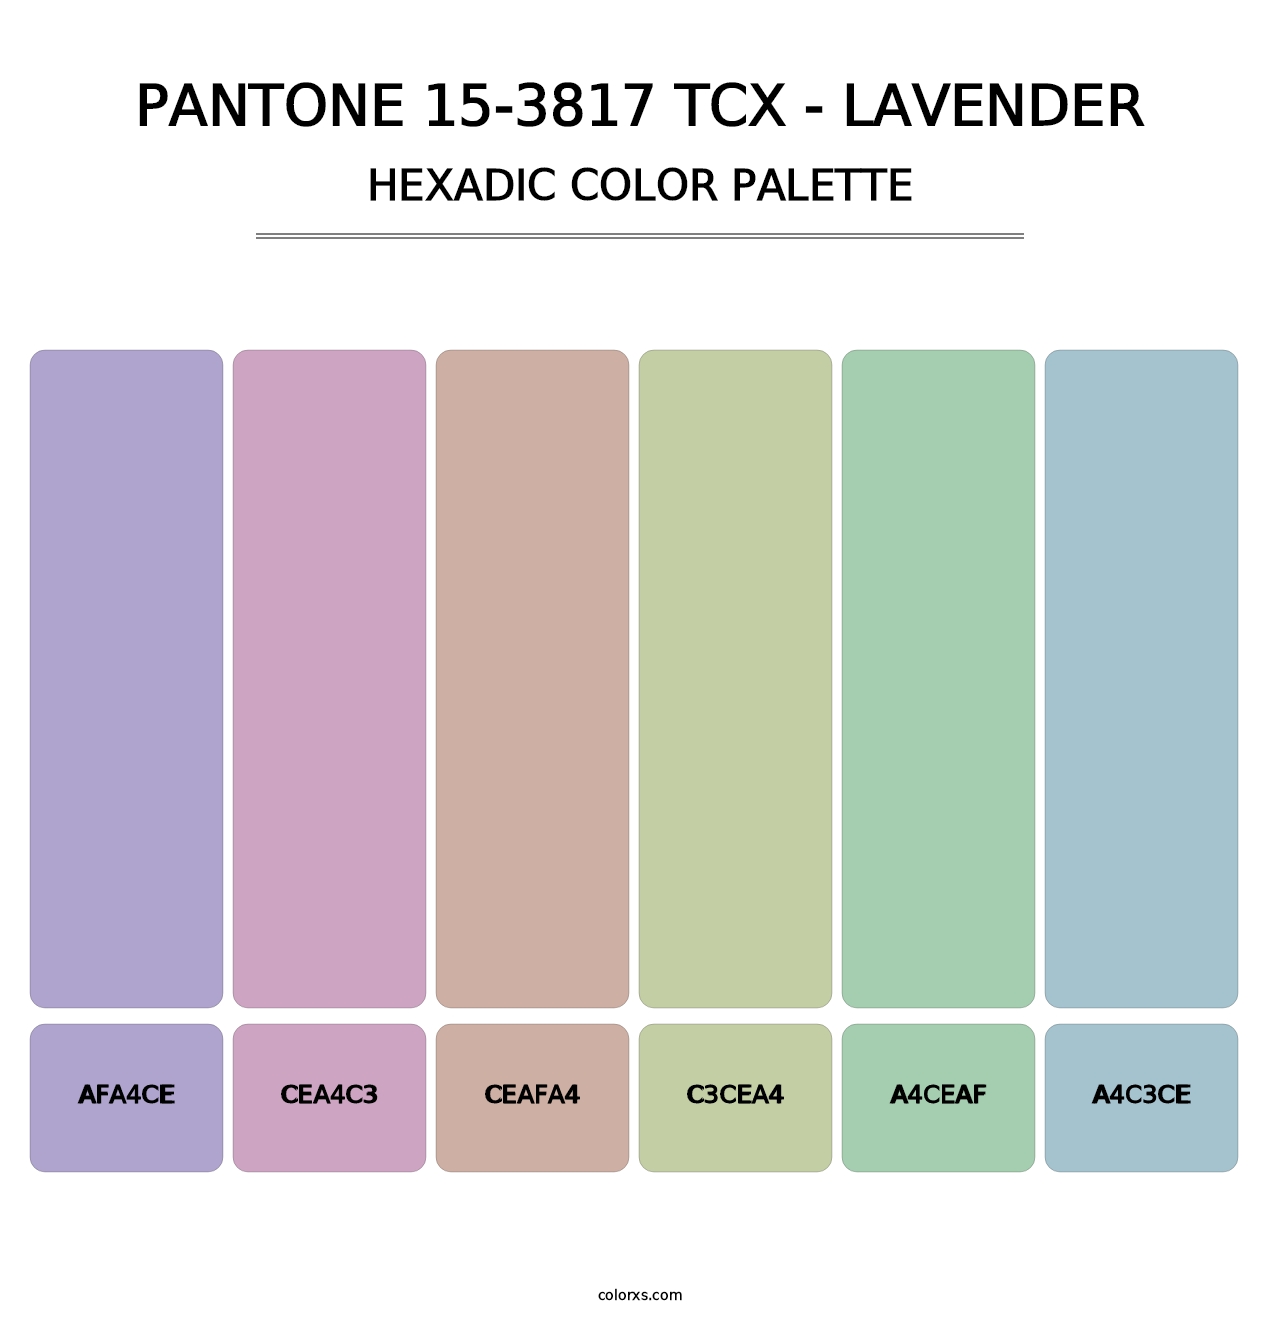 PANTONE 15-3817 TCX - Lavender - Hexadic Color Palette